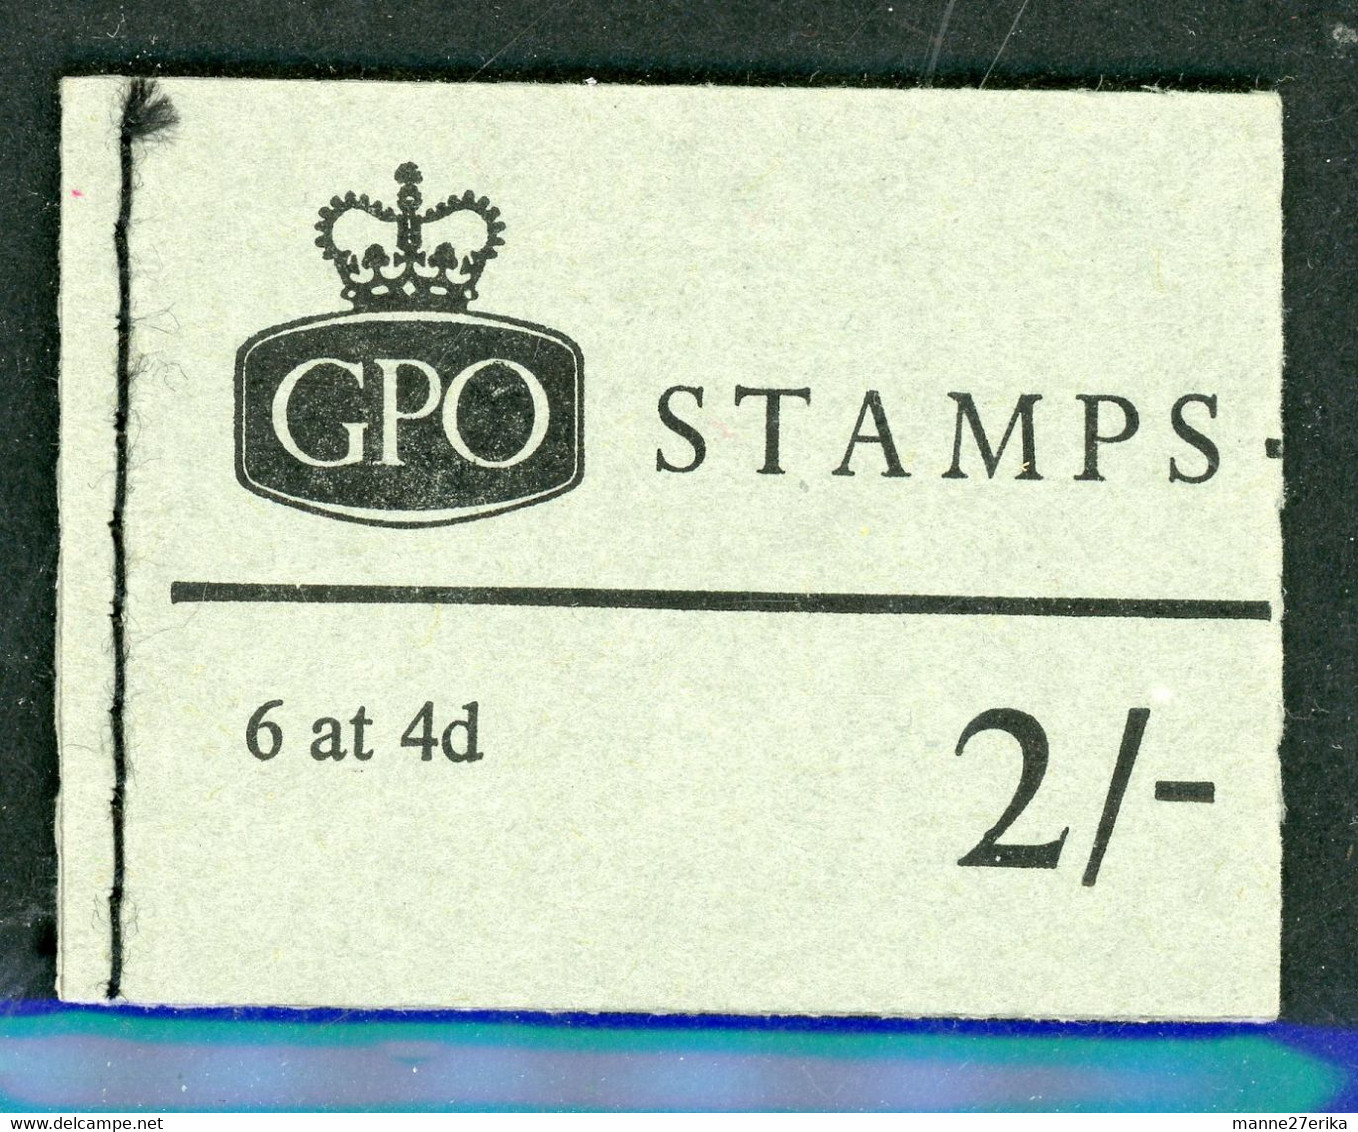 Great Britain Booklet - Unused Stamps